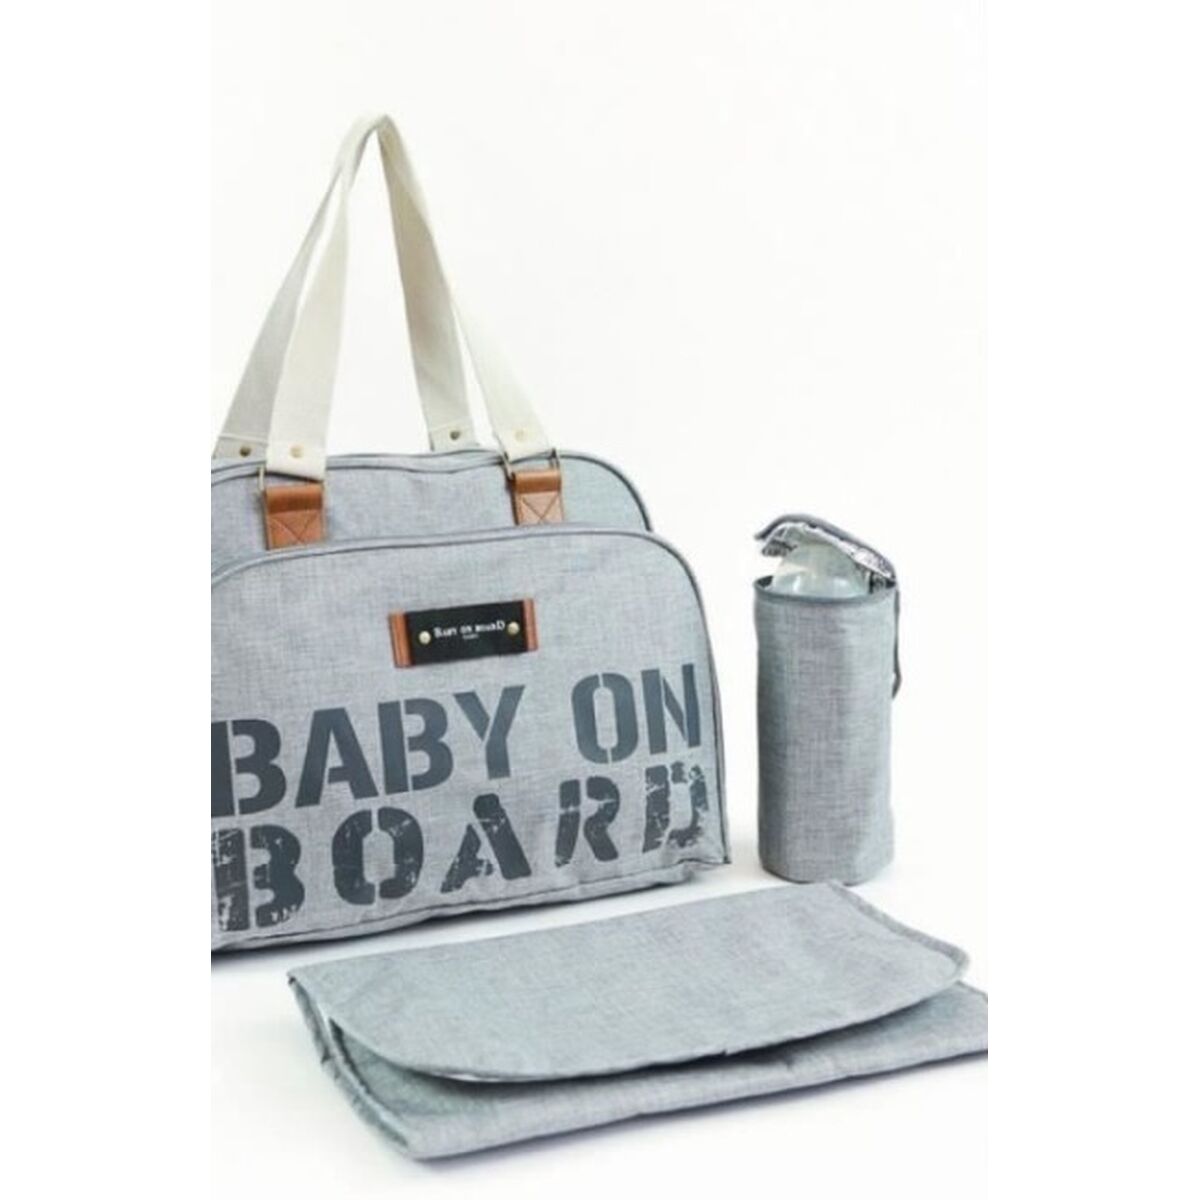 Rearview Baby Mirror for Rear Seat Baby on Board Urban Street Parasol Set - Little Baby Shop